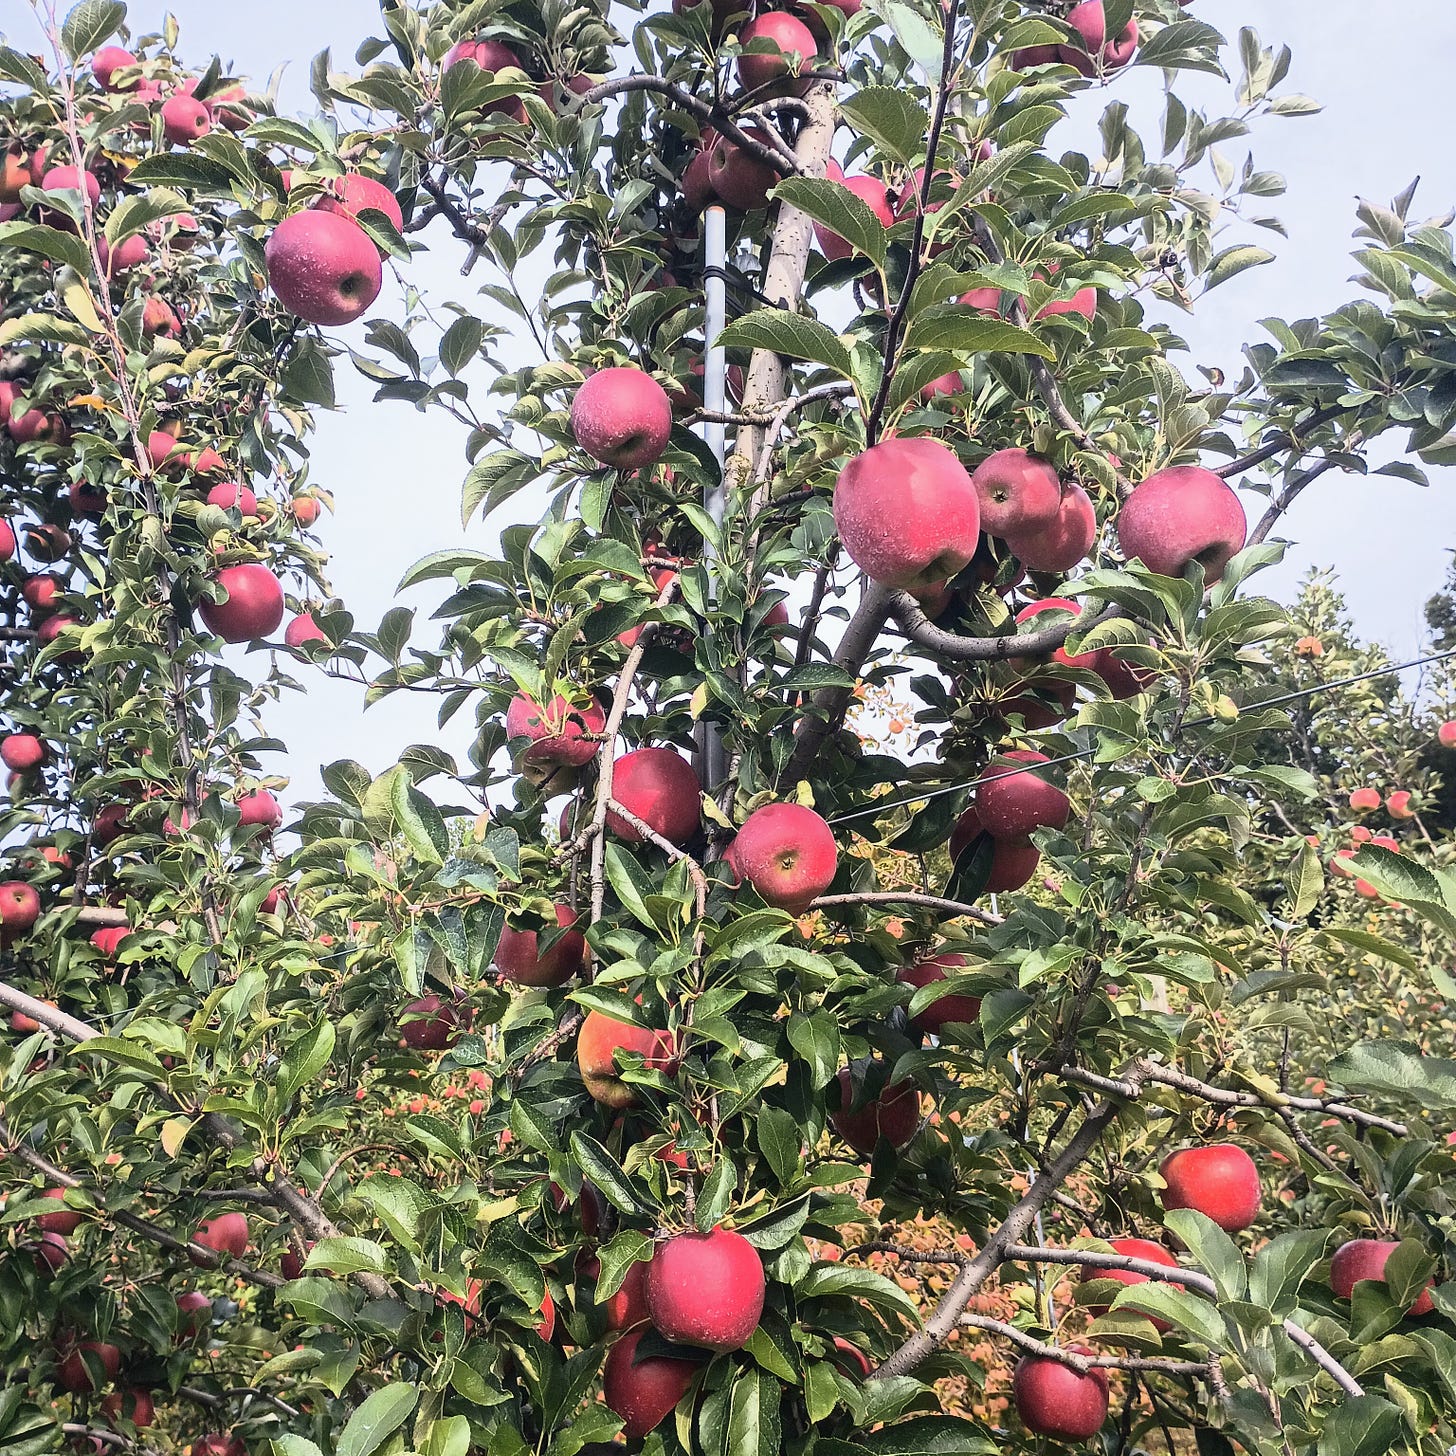 Crimson Crisp apple trees